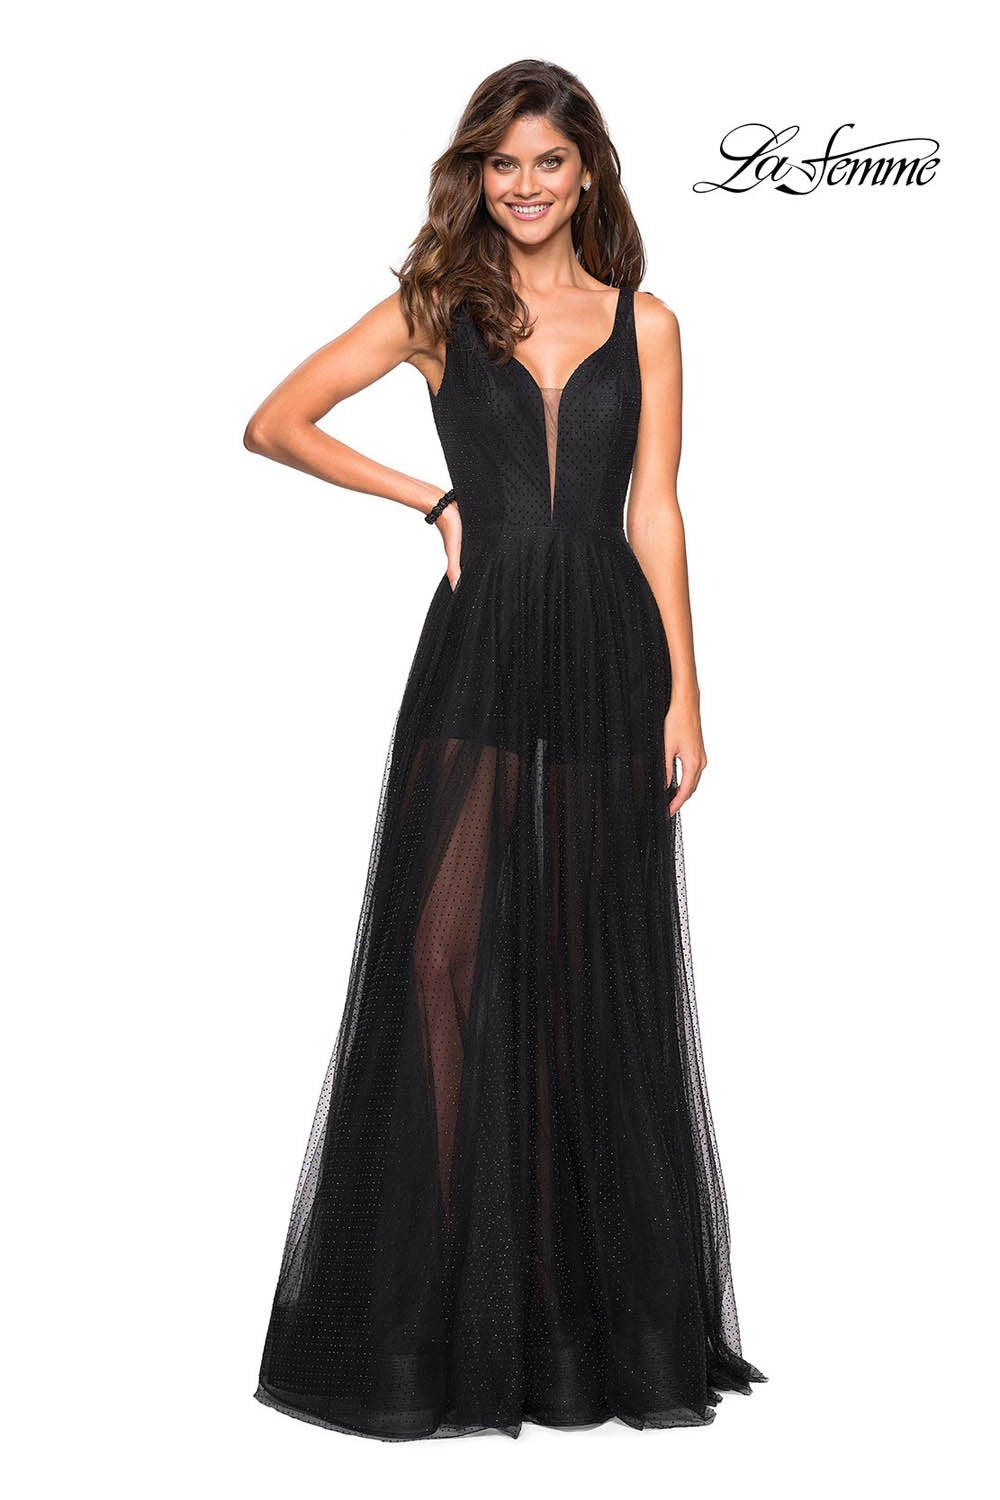 La Femme 27457 dress images in these colors: Black.